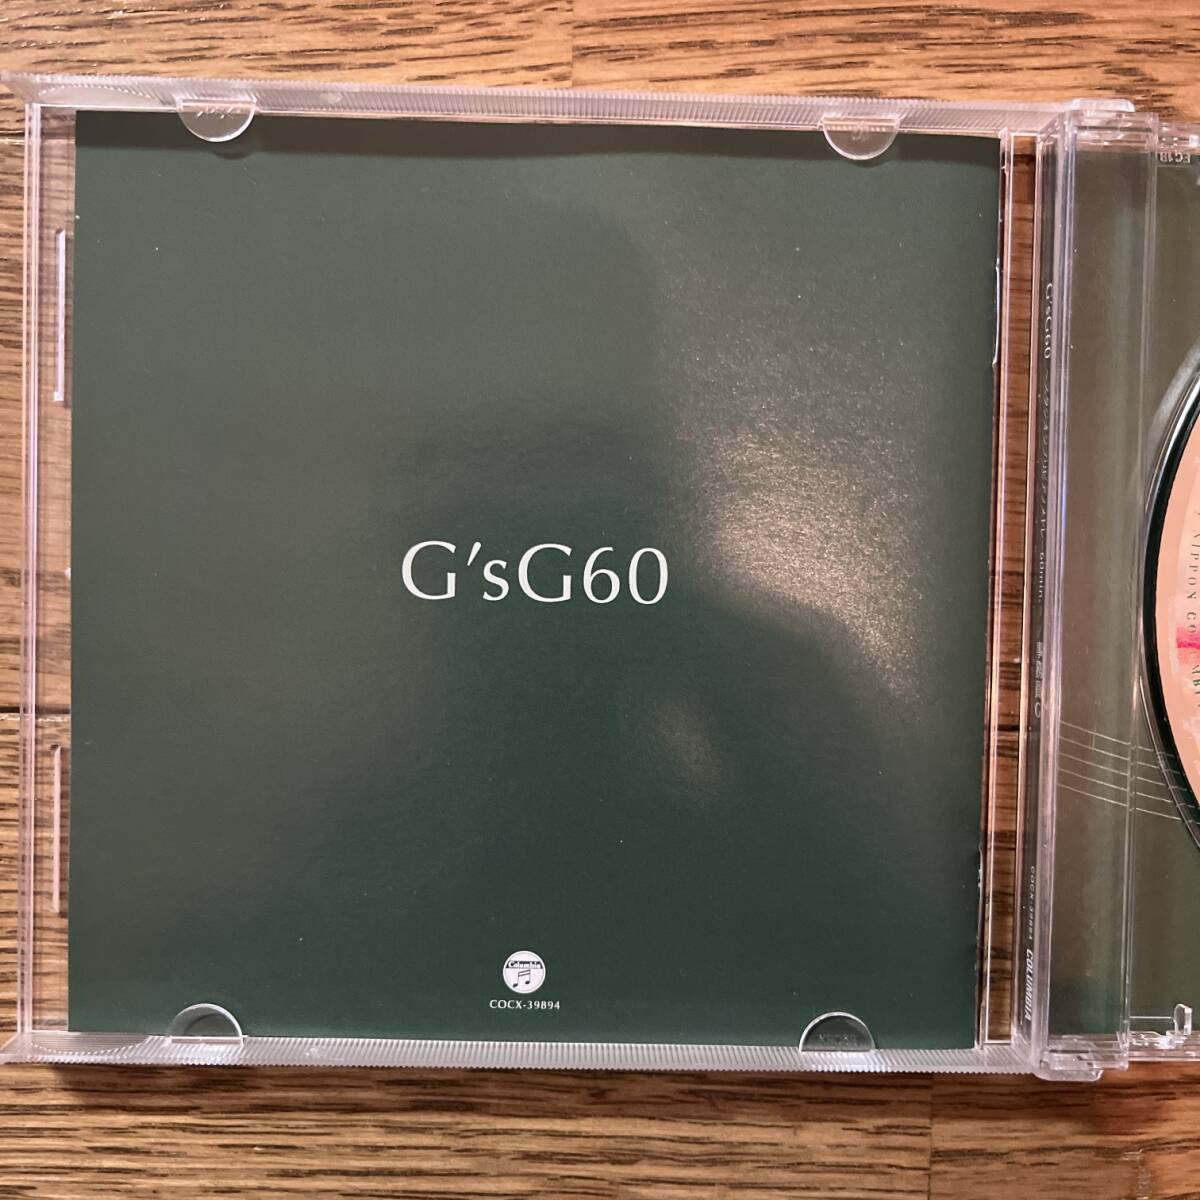  domestic record CD GsG60 Studio Ghibli piano medore-60min. CD office work member G COCX-39894 obi attaching 